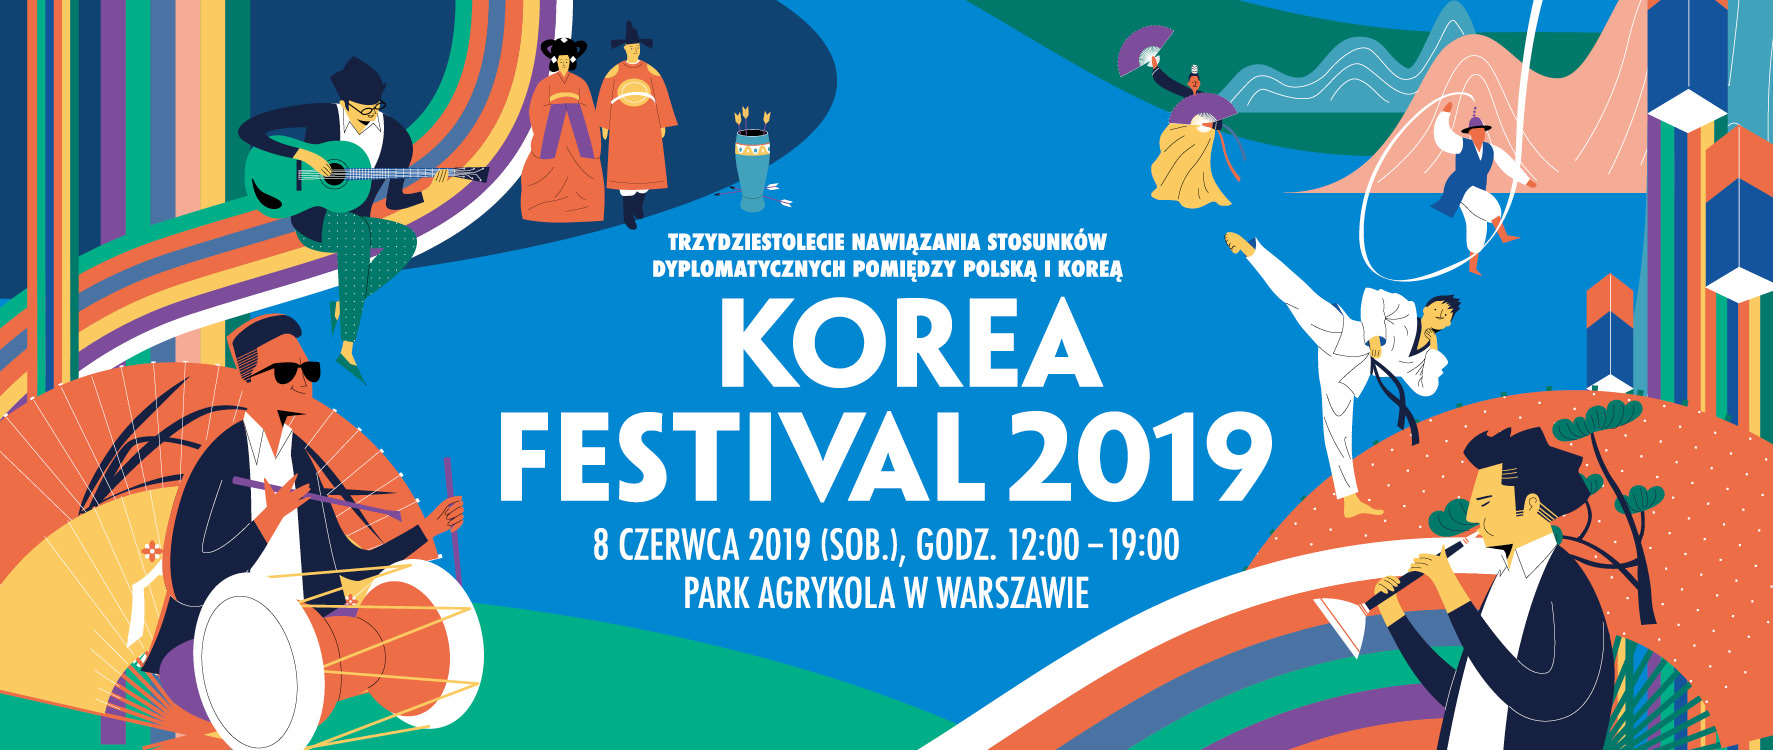 Korea Festival 2019